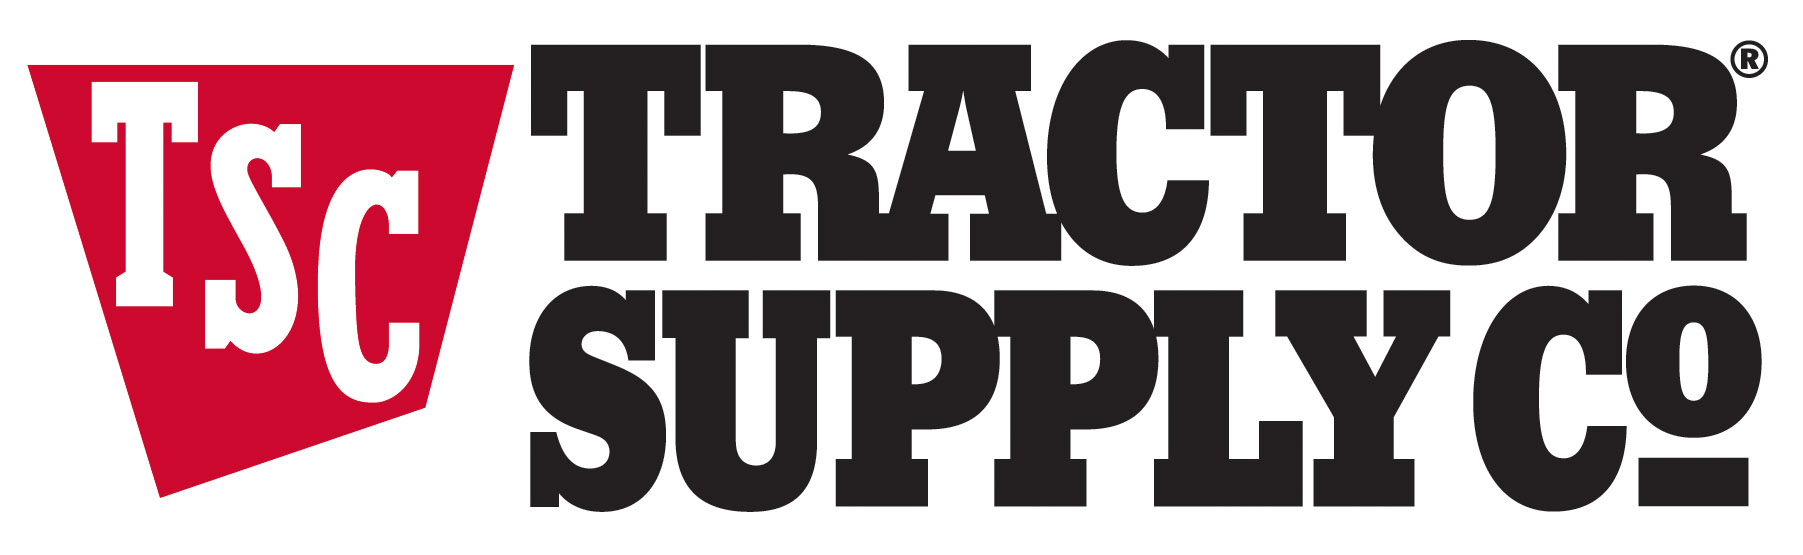 tractor supply logo